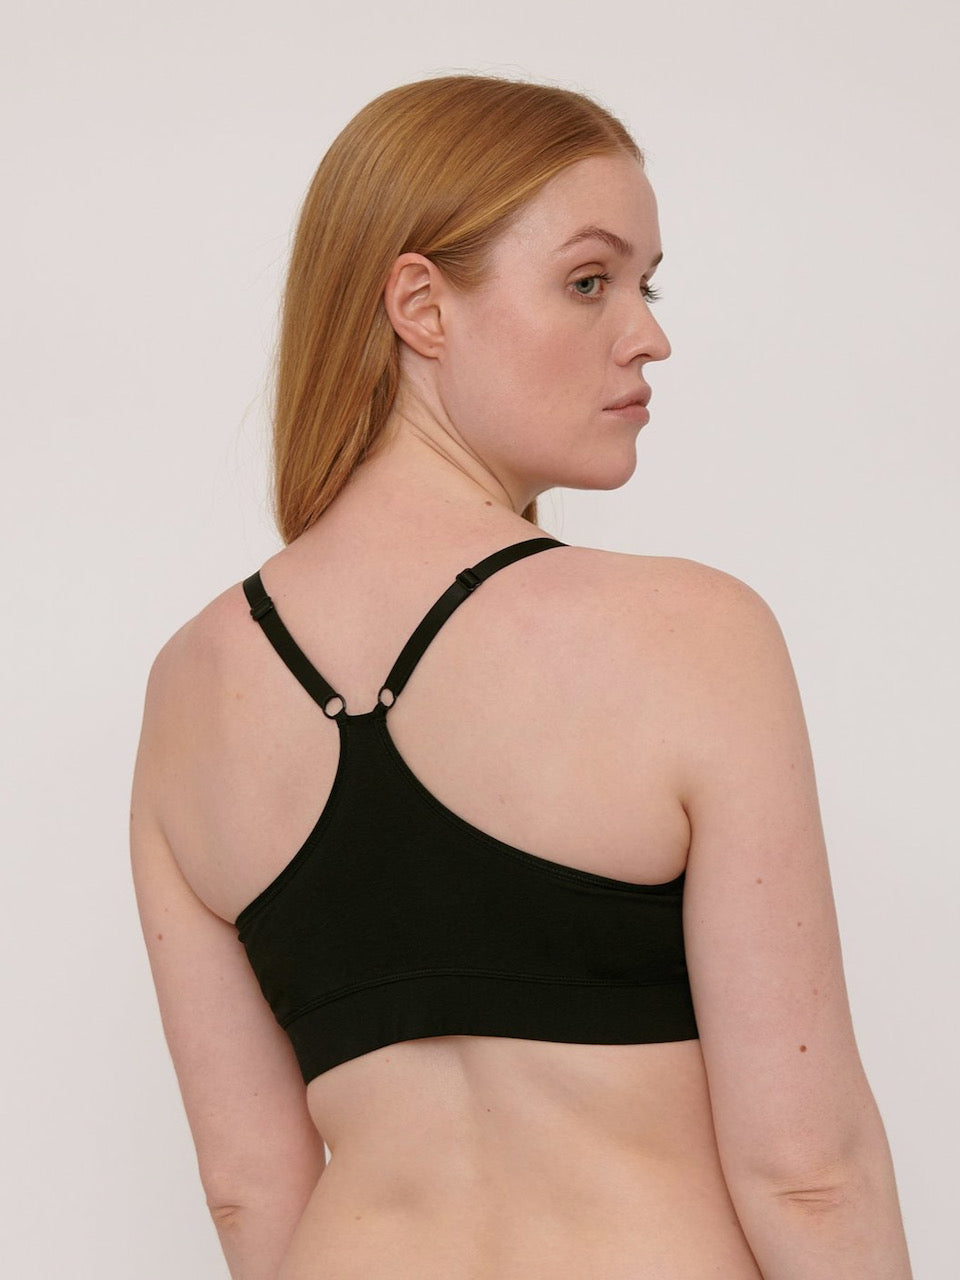 The back view of a woman wearing an Organic Basics Basic Bra ⋅ organic cotton – Black.